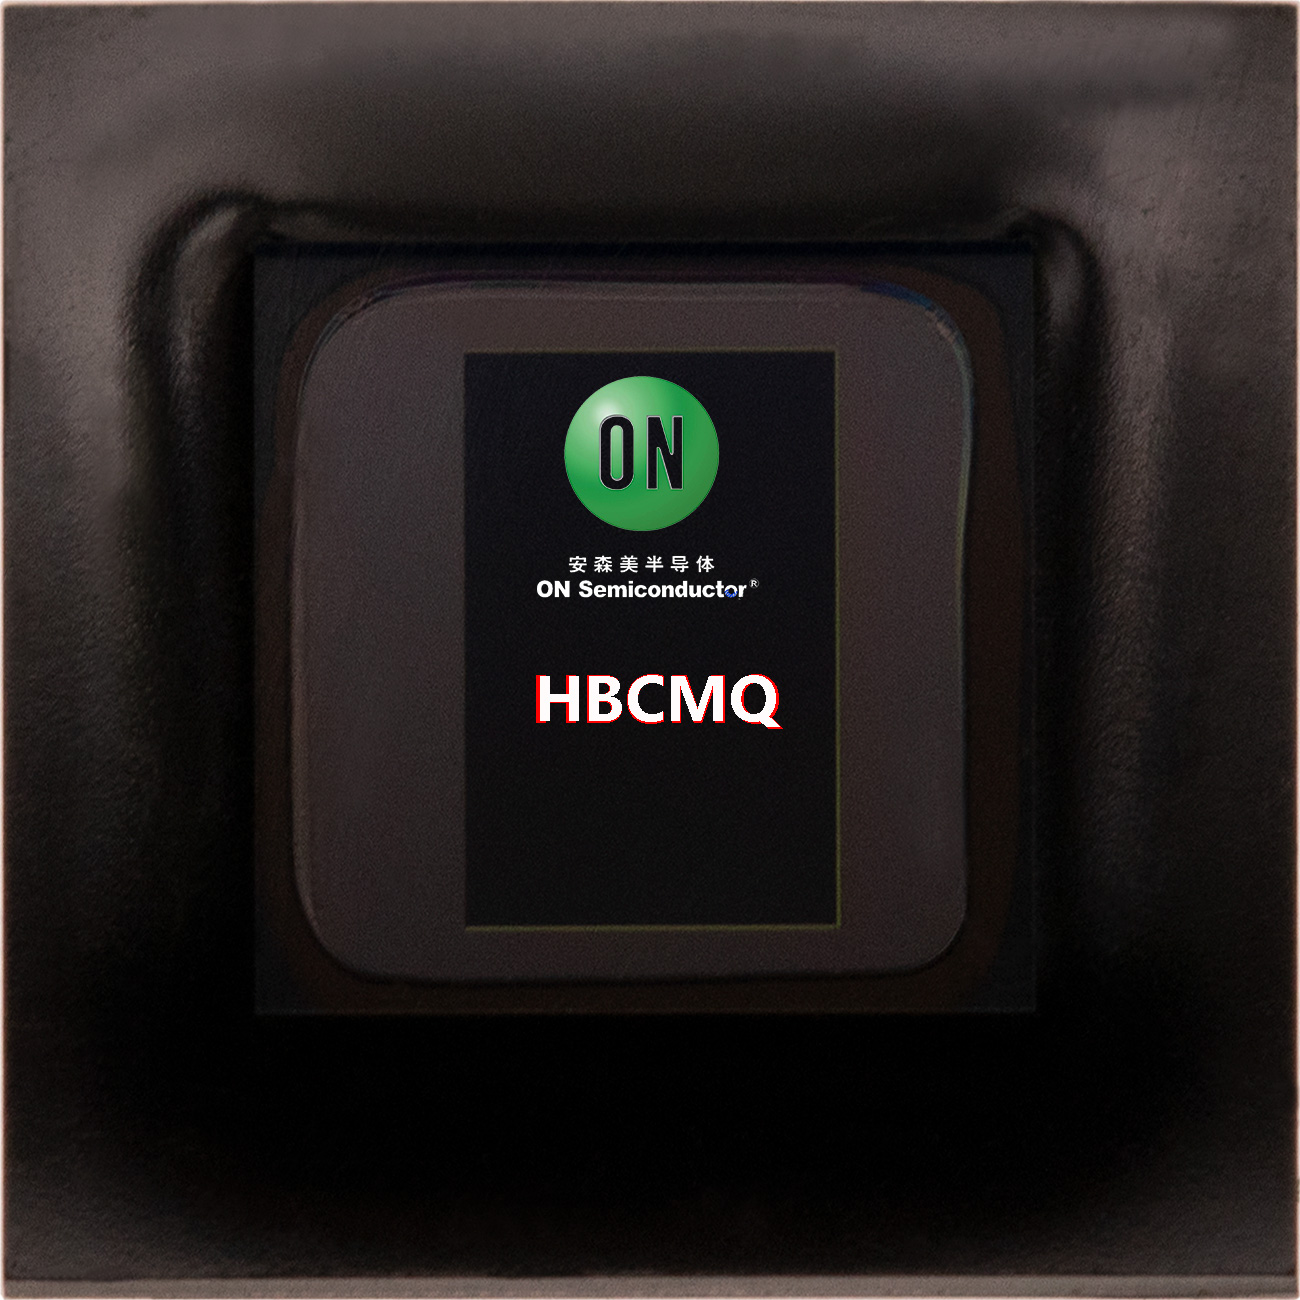 HBCMQ,ONSEMI CMOS SENSOR,安森美图像传感器，工业相机图像传感器，工业相机sensor,industrial camera sensor，ON Semiconductor image cmos sensor,Global shutter image sensor